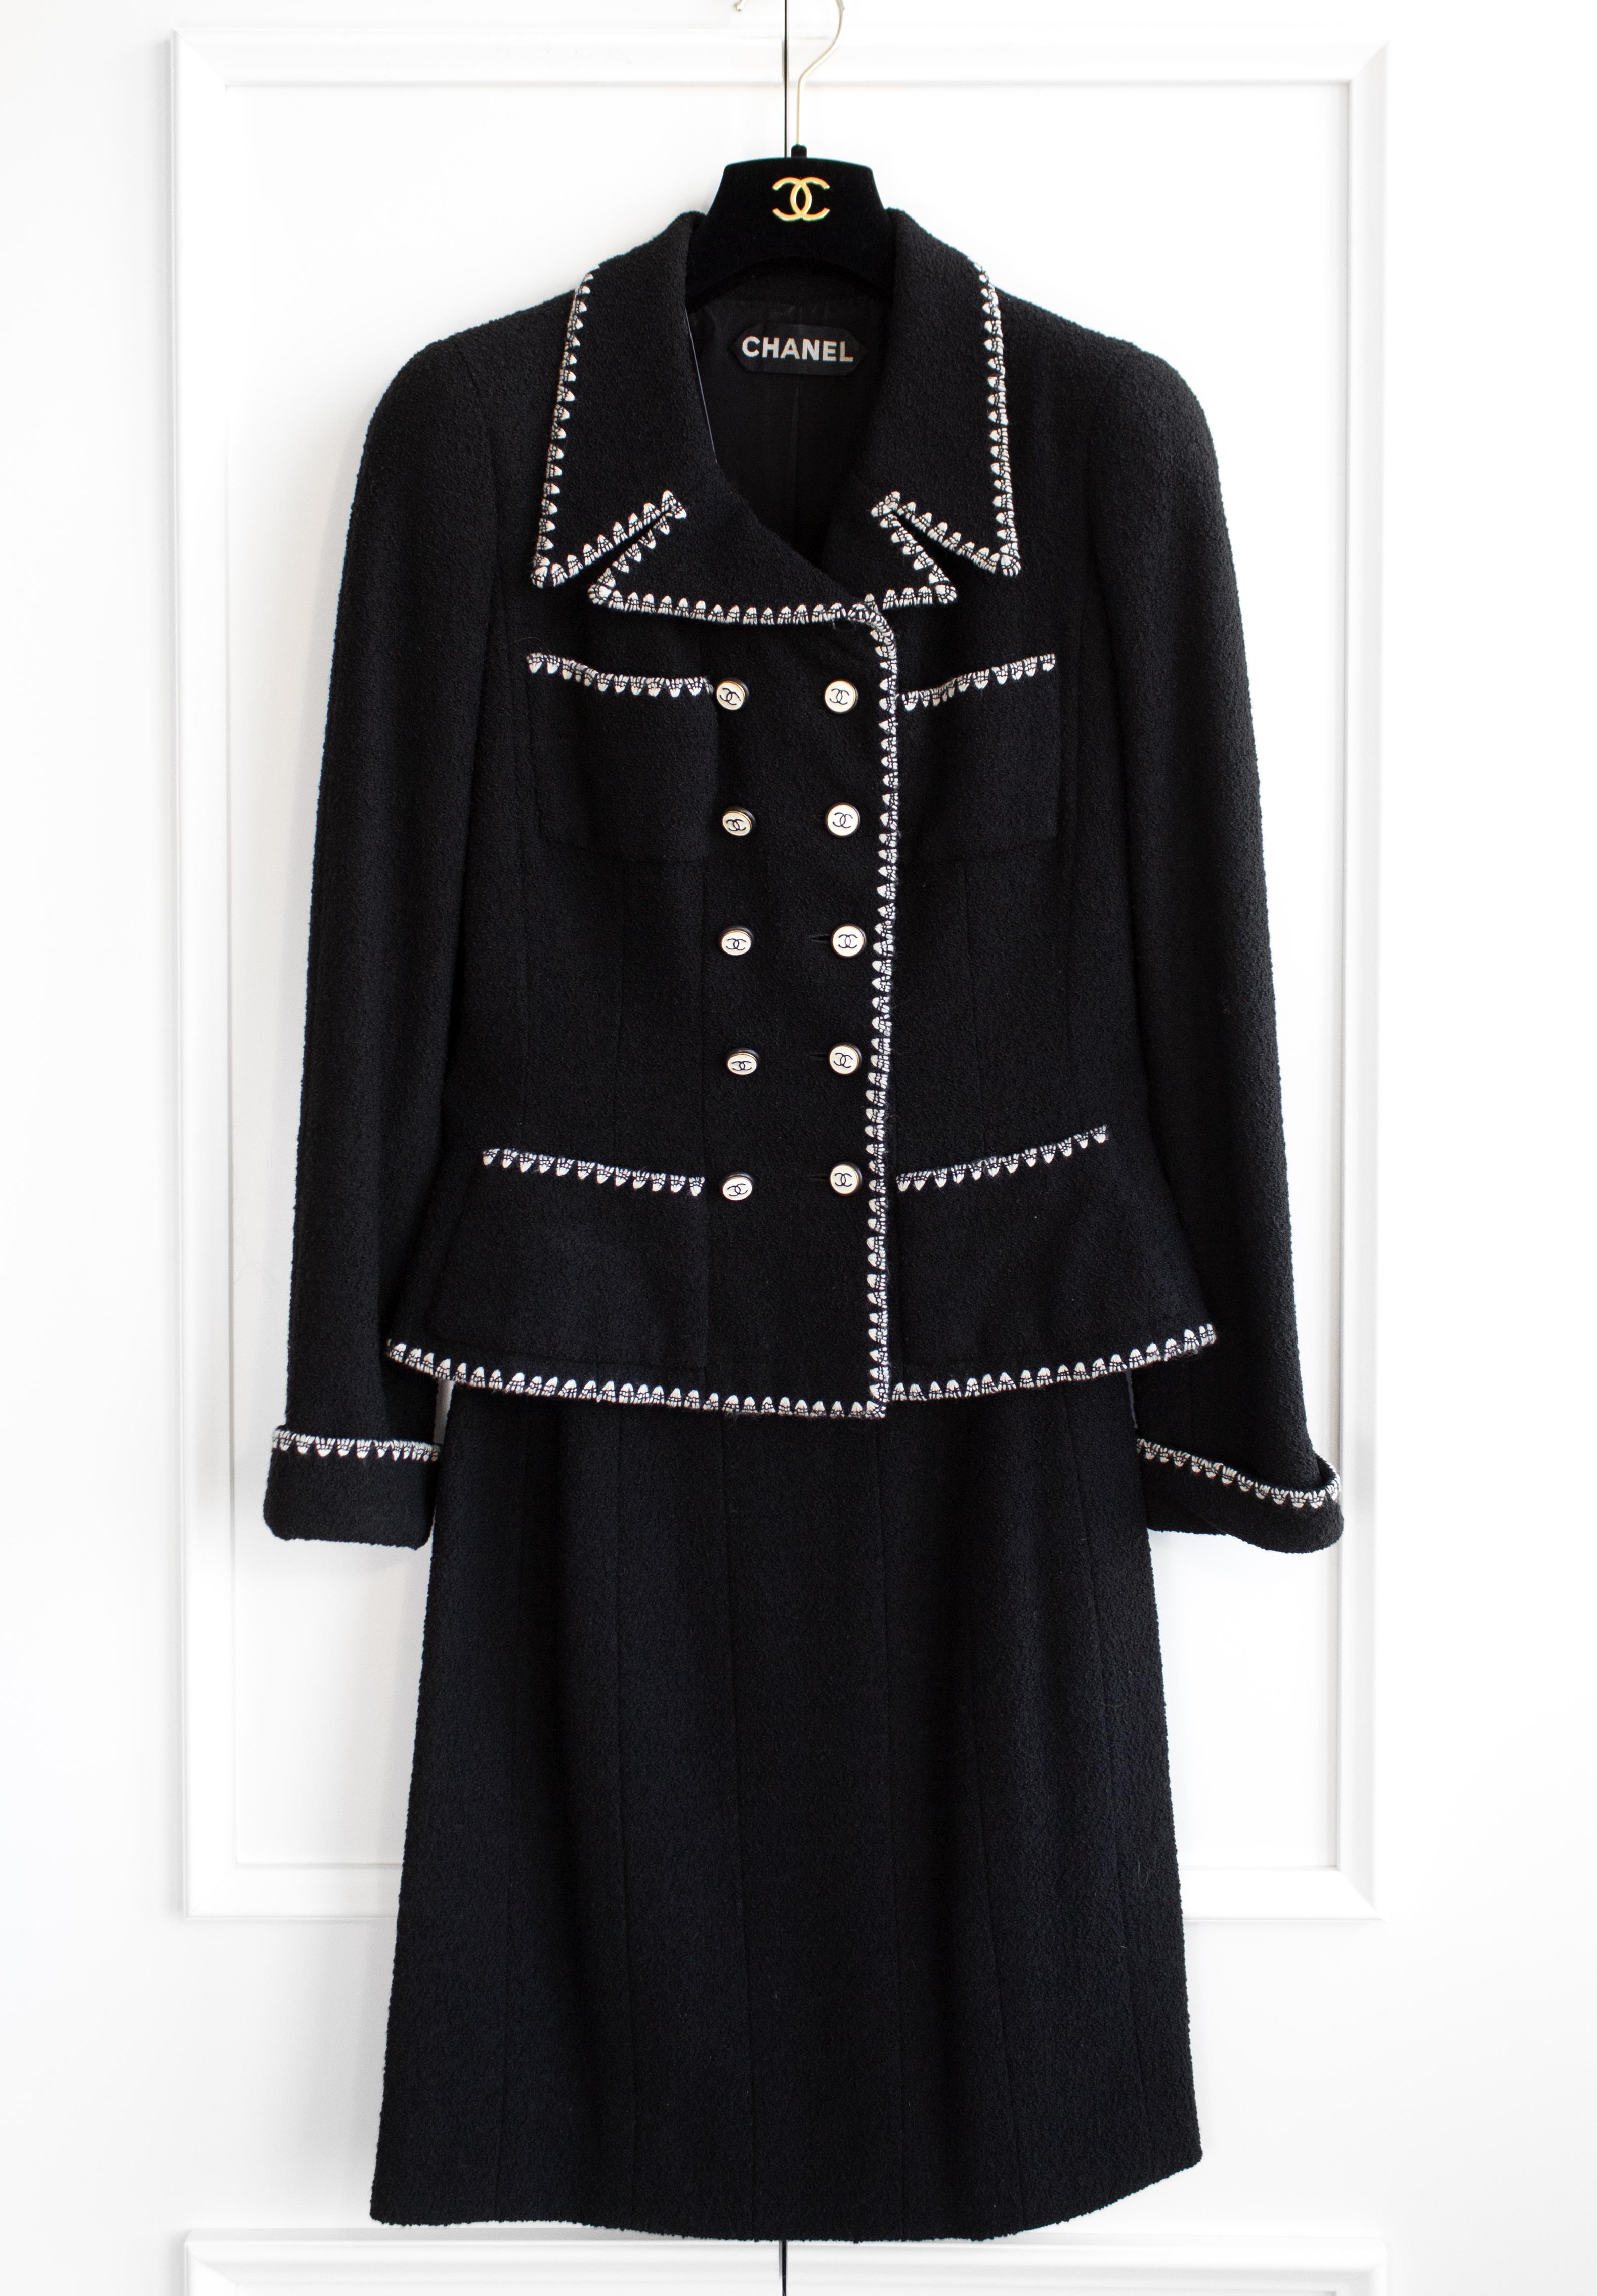 Chanel Vintage Haute Couture S/S 1995 Black White CC Tweed Jacket Skirt Suit 2